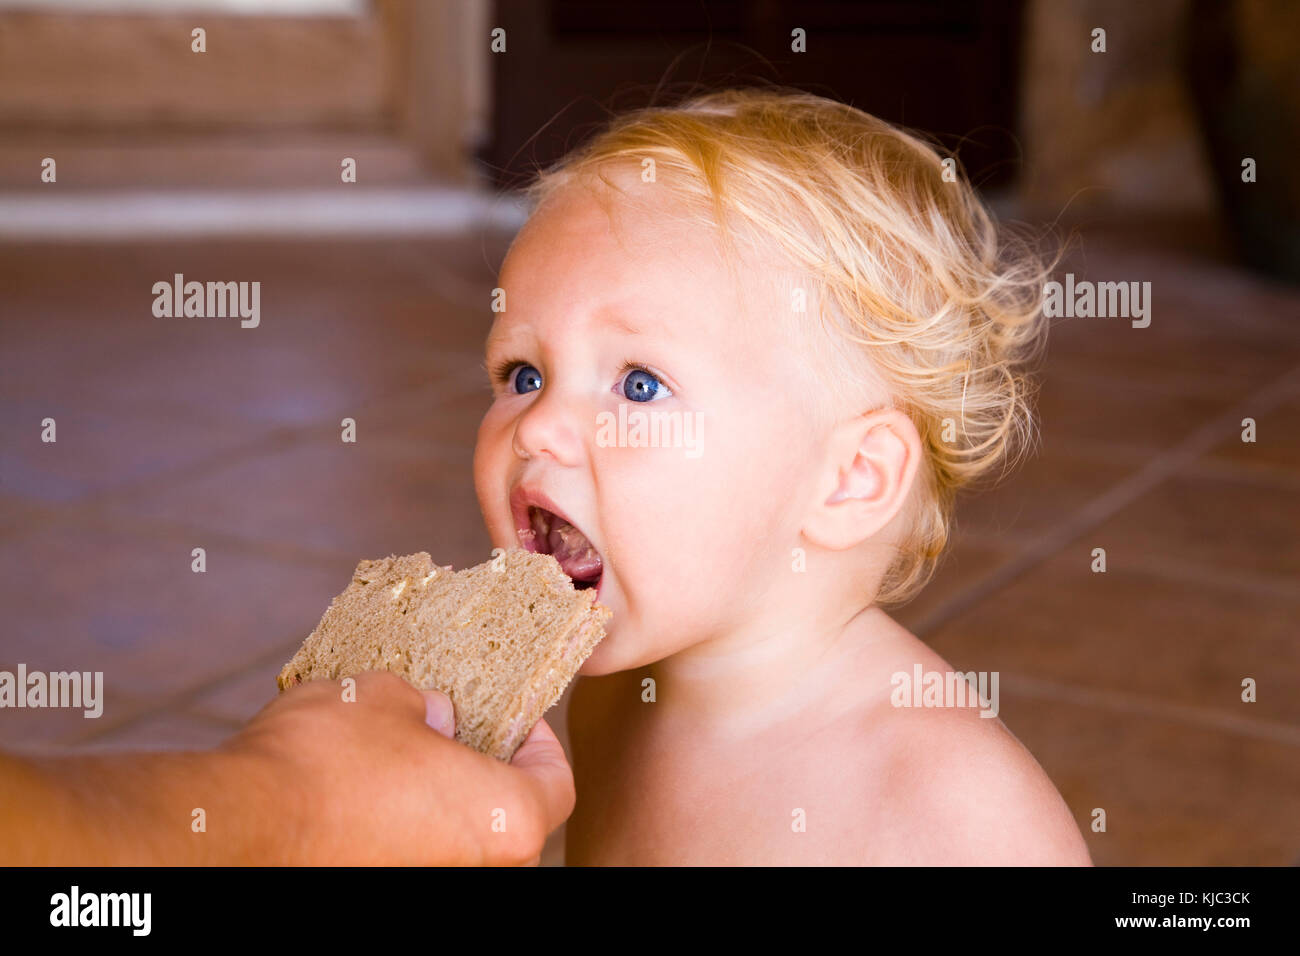 Baby essen Stück Brot Stockfoto